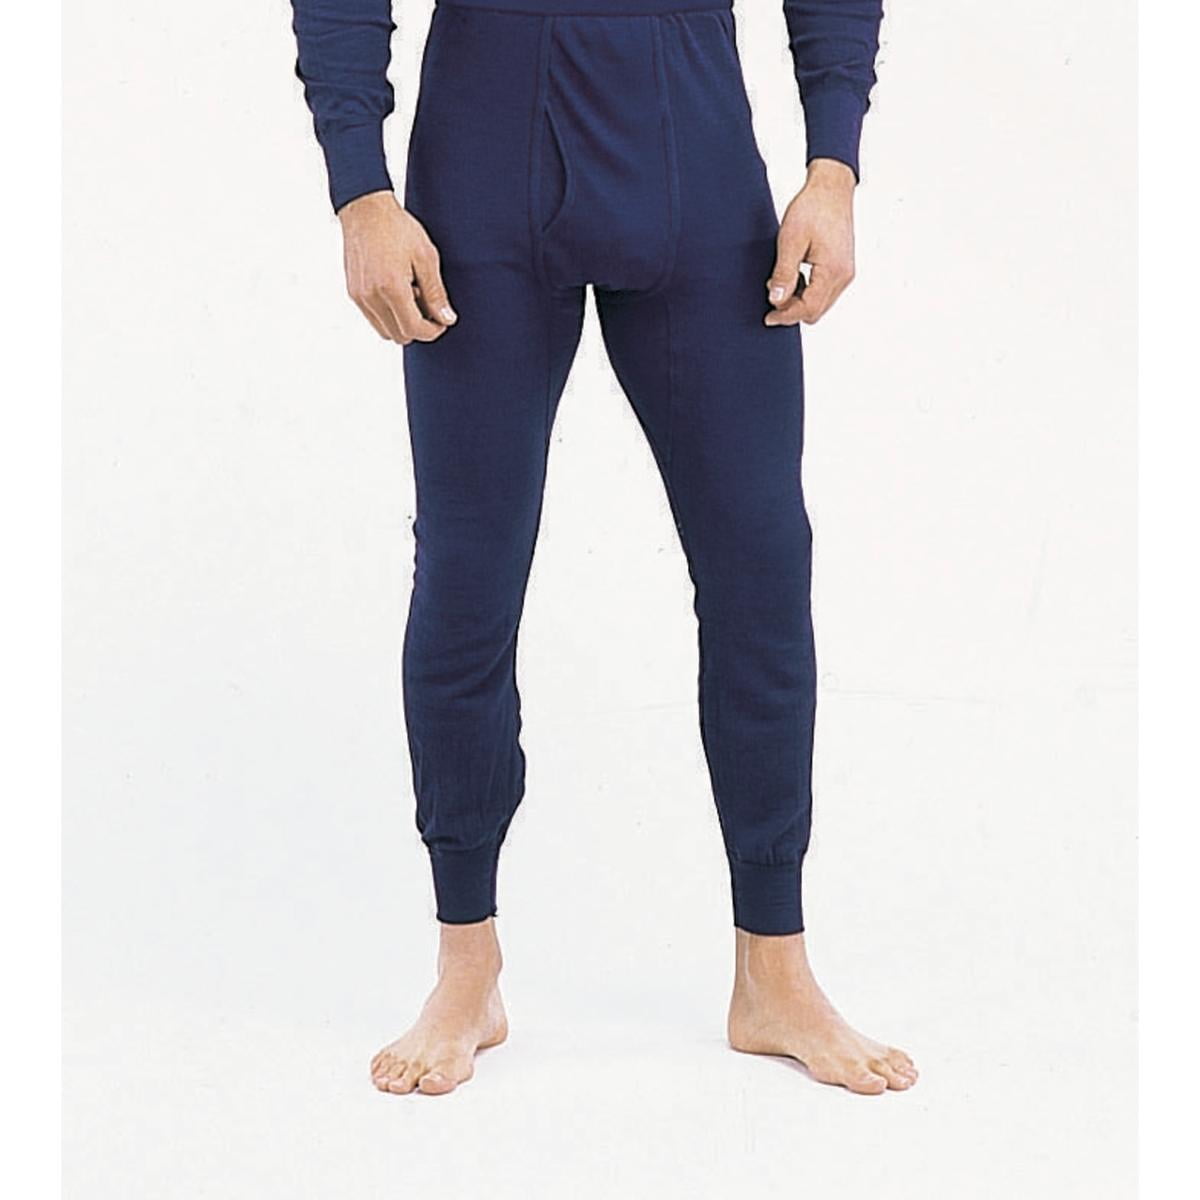 Blue Polypropylene Thermal Long Underwear Pants/Bottoms